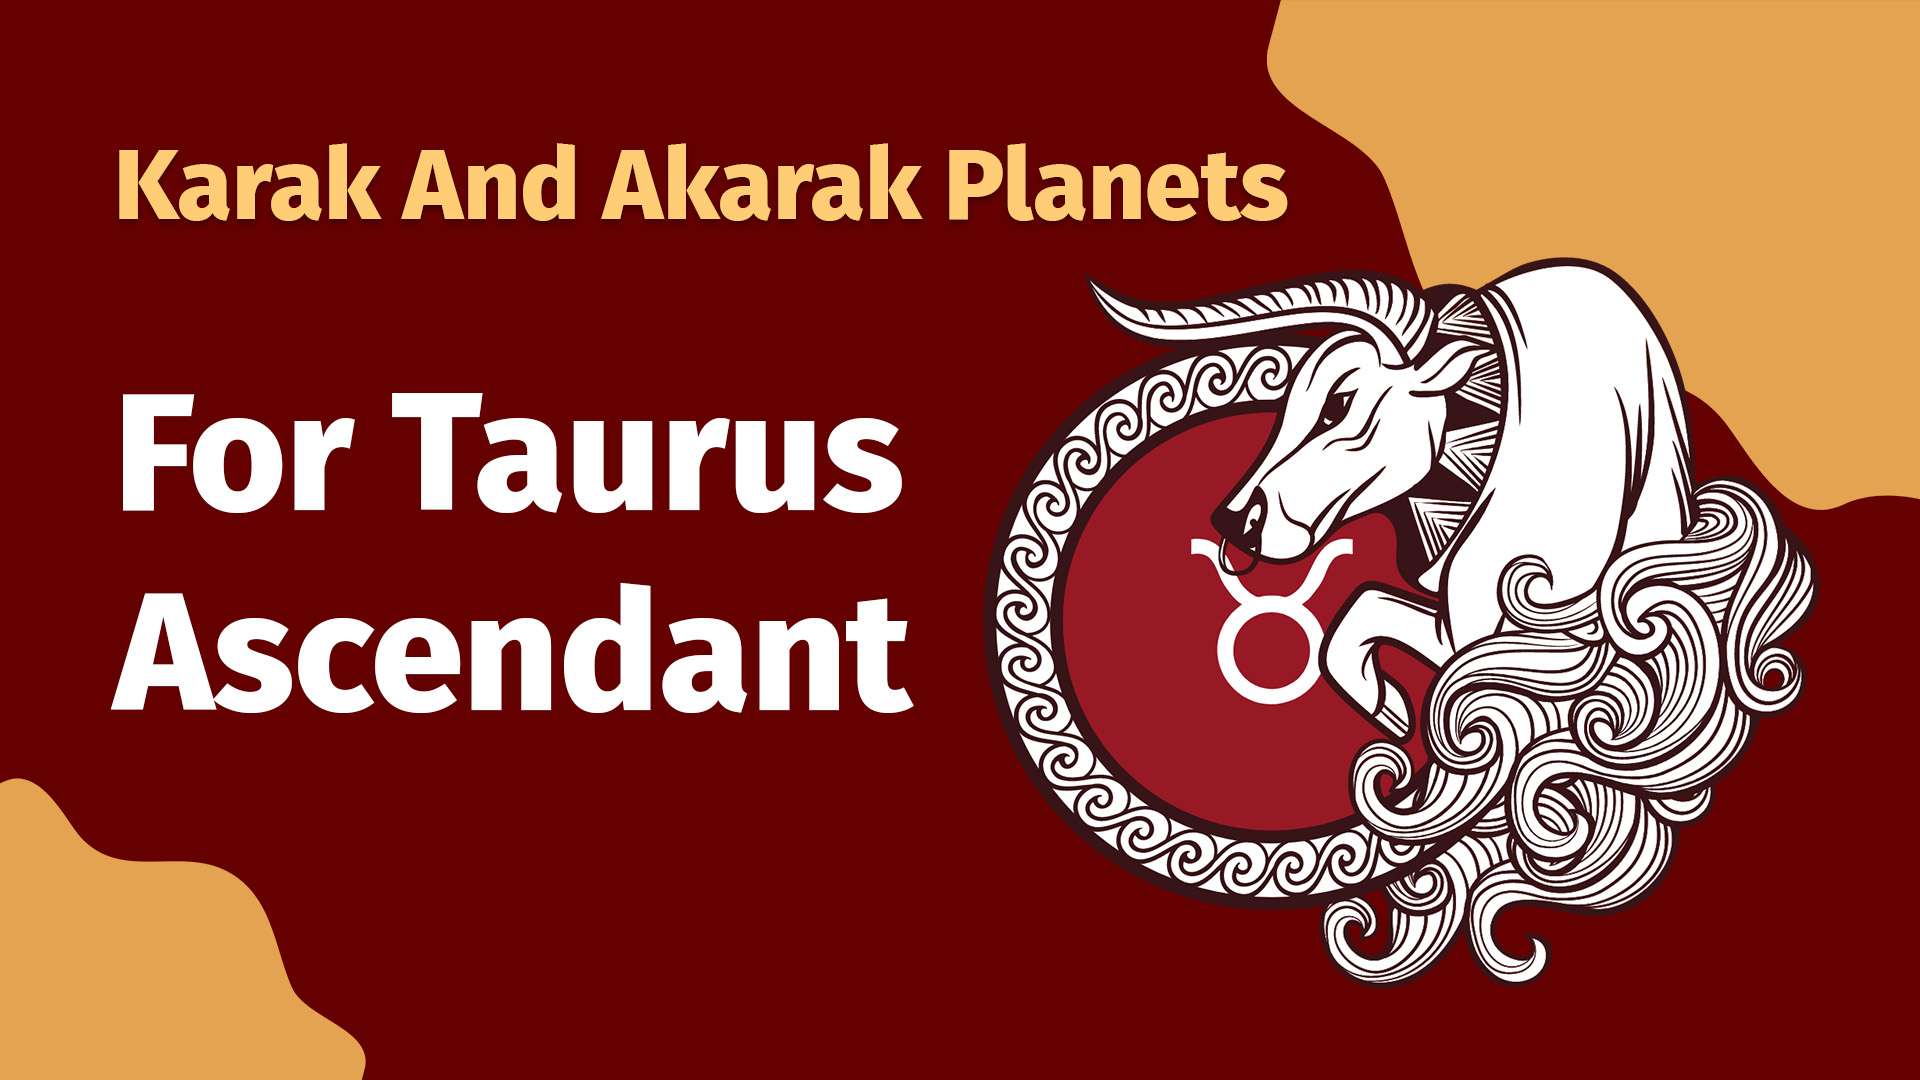 Karak and Akarak planets of Taurus Ascendants